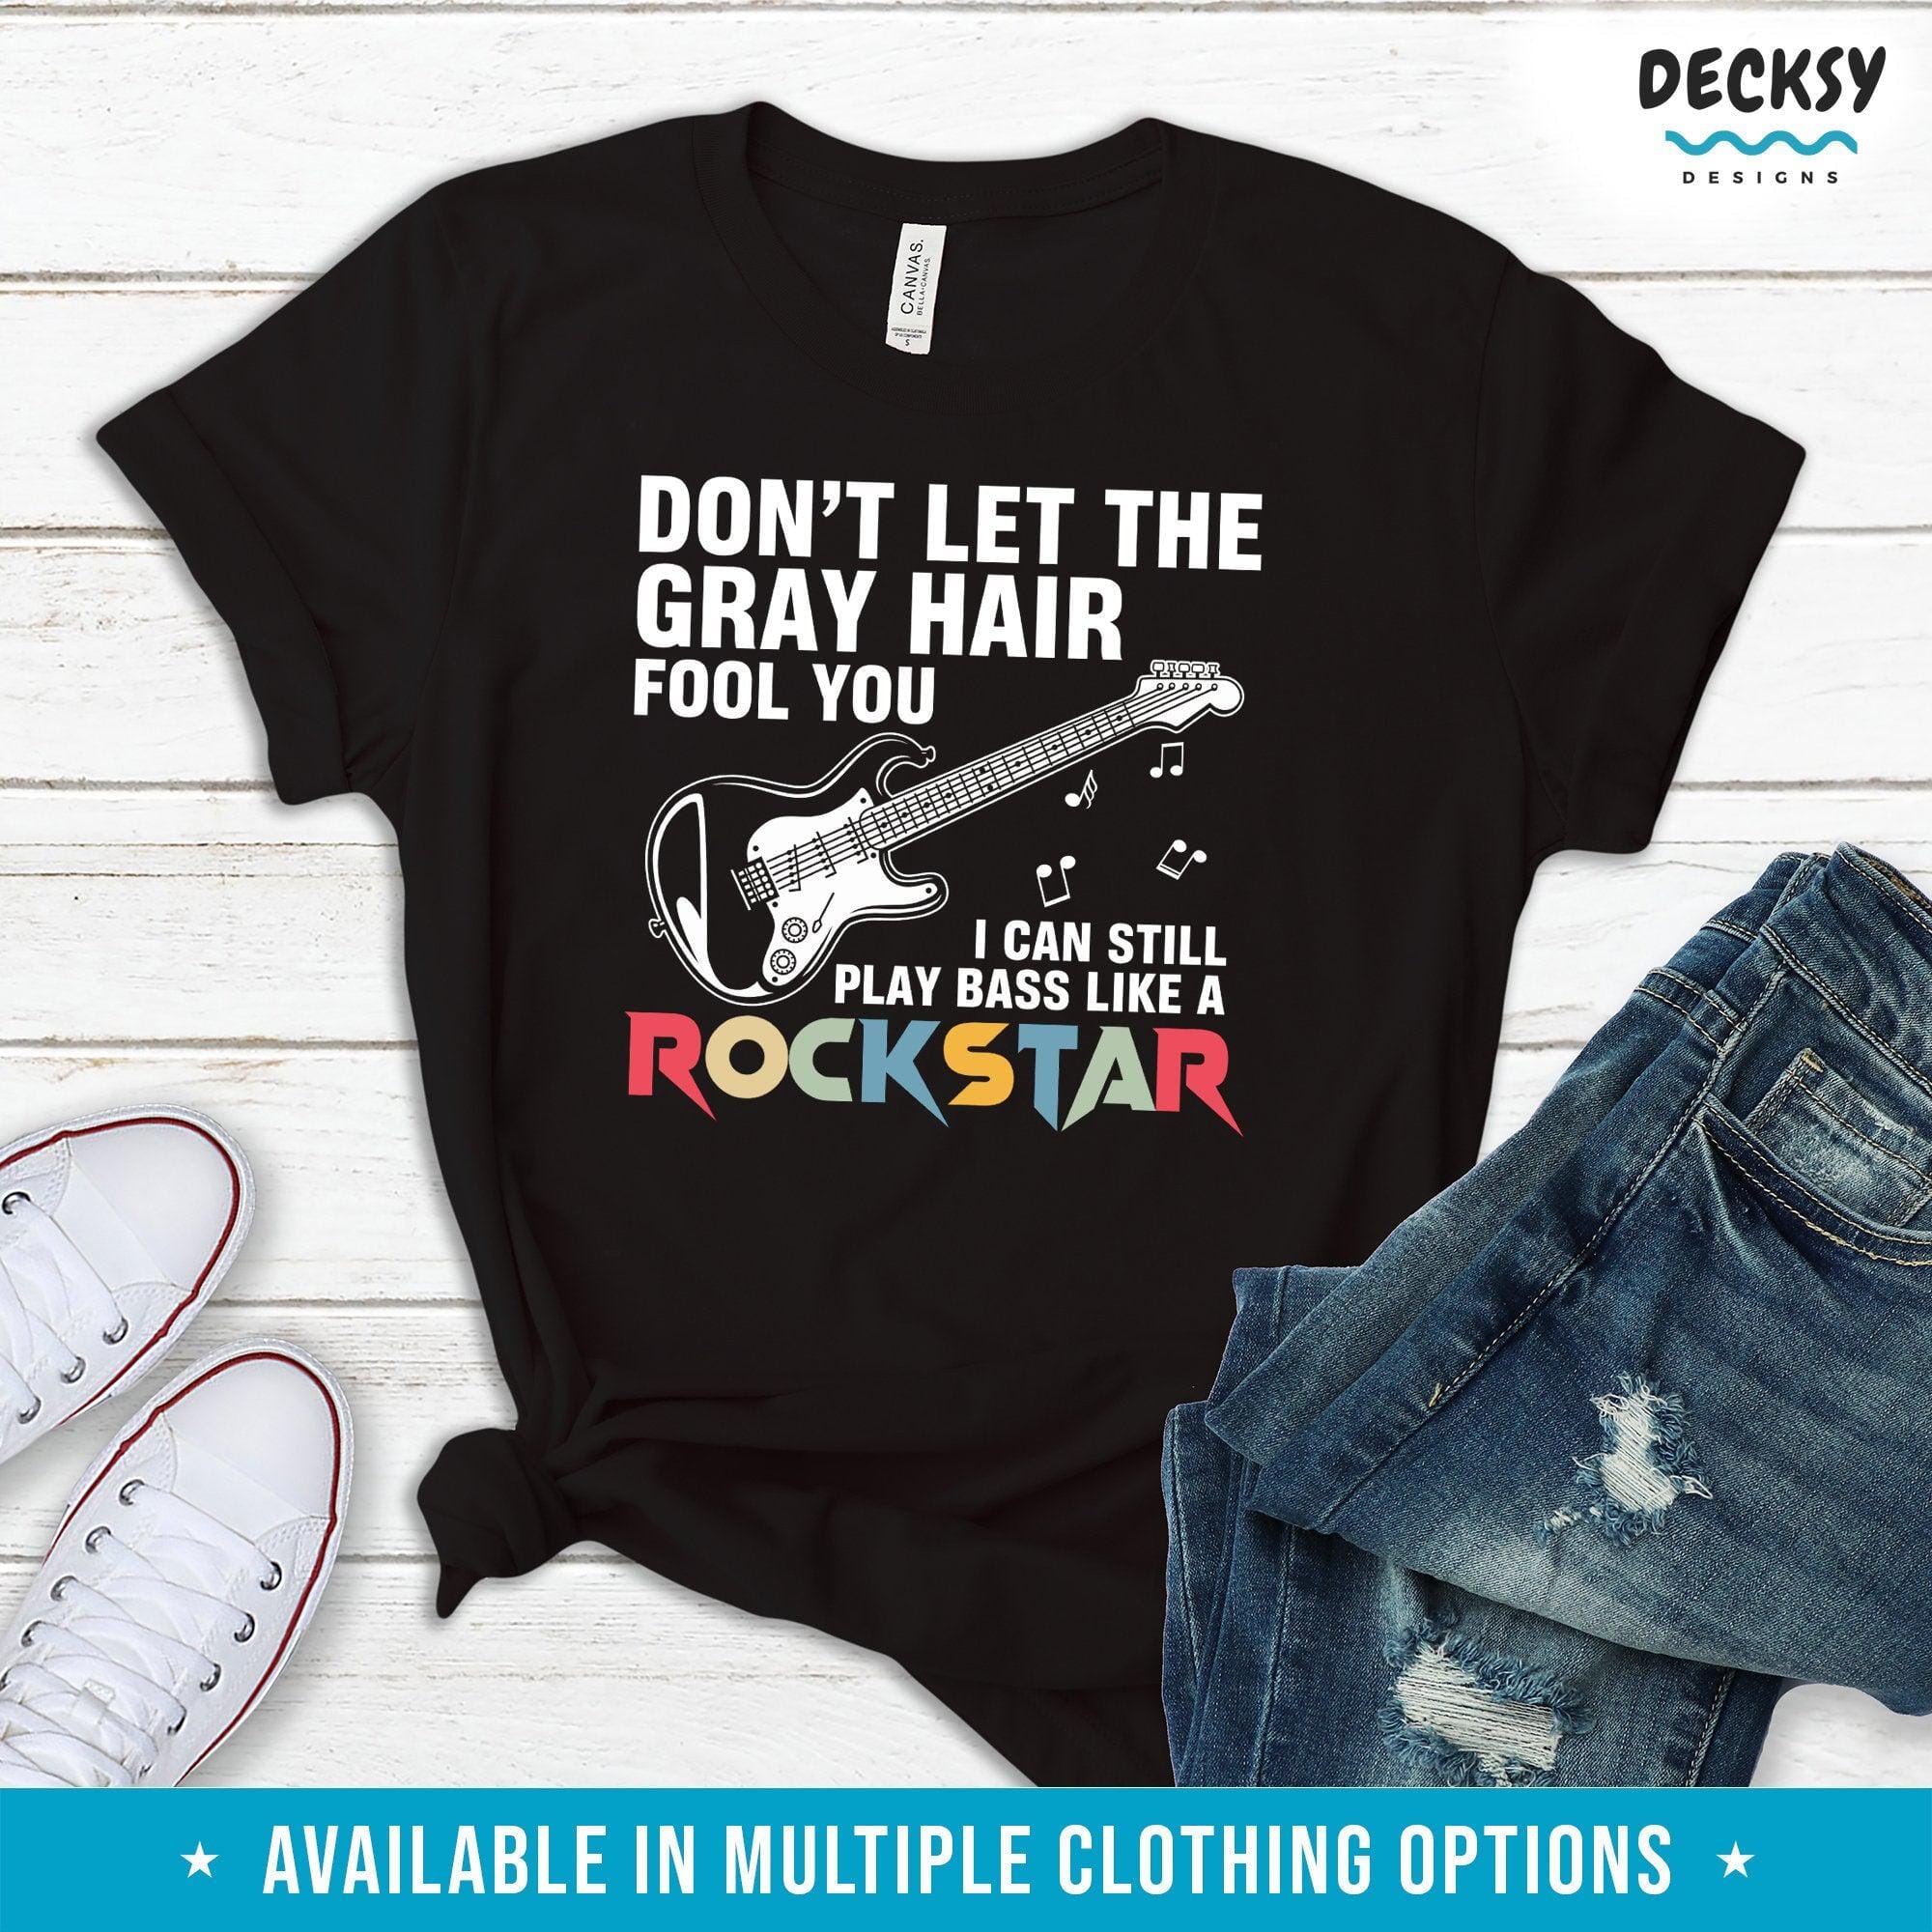 Guitar Teacher Shirt, Musician Birthday Gift-Clothing:Gender-Neutral Adult Clothing:Tops & Tees:T-shirts:Graphic Tees-DecksyDesigns